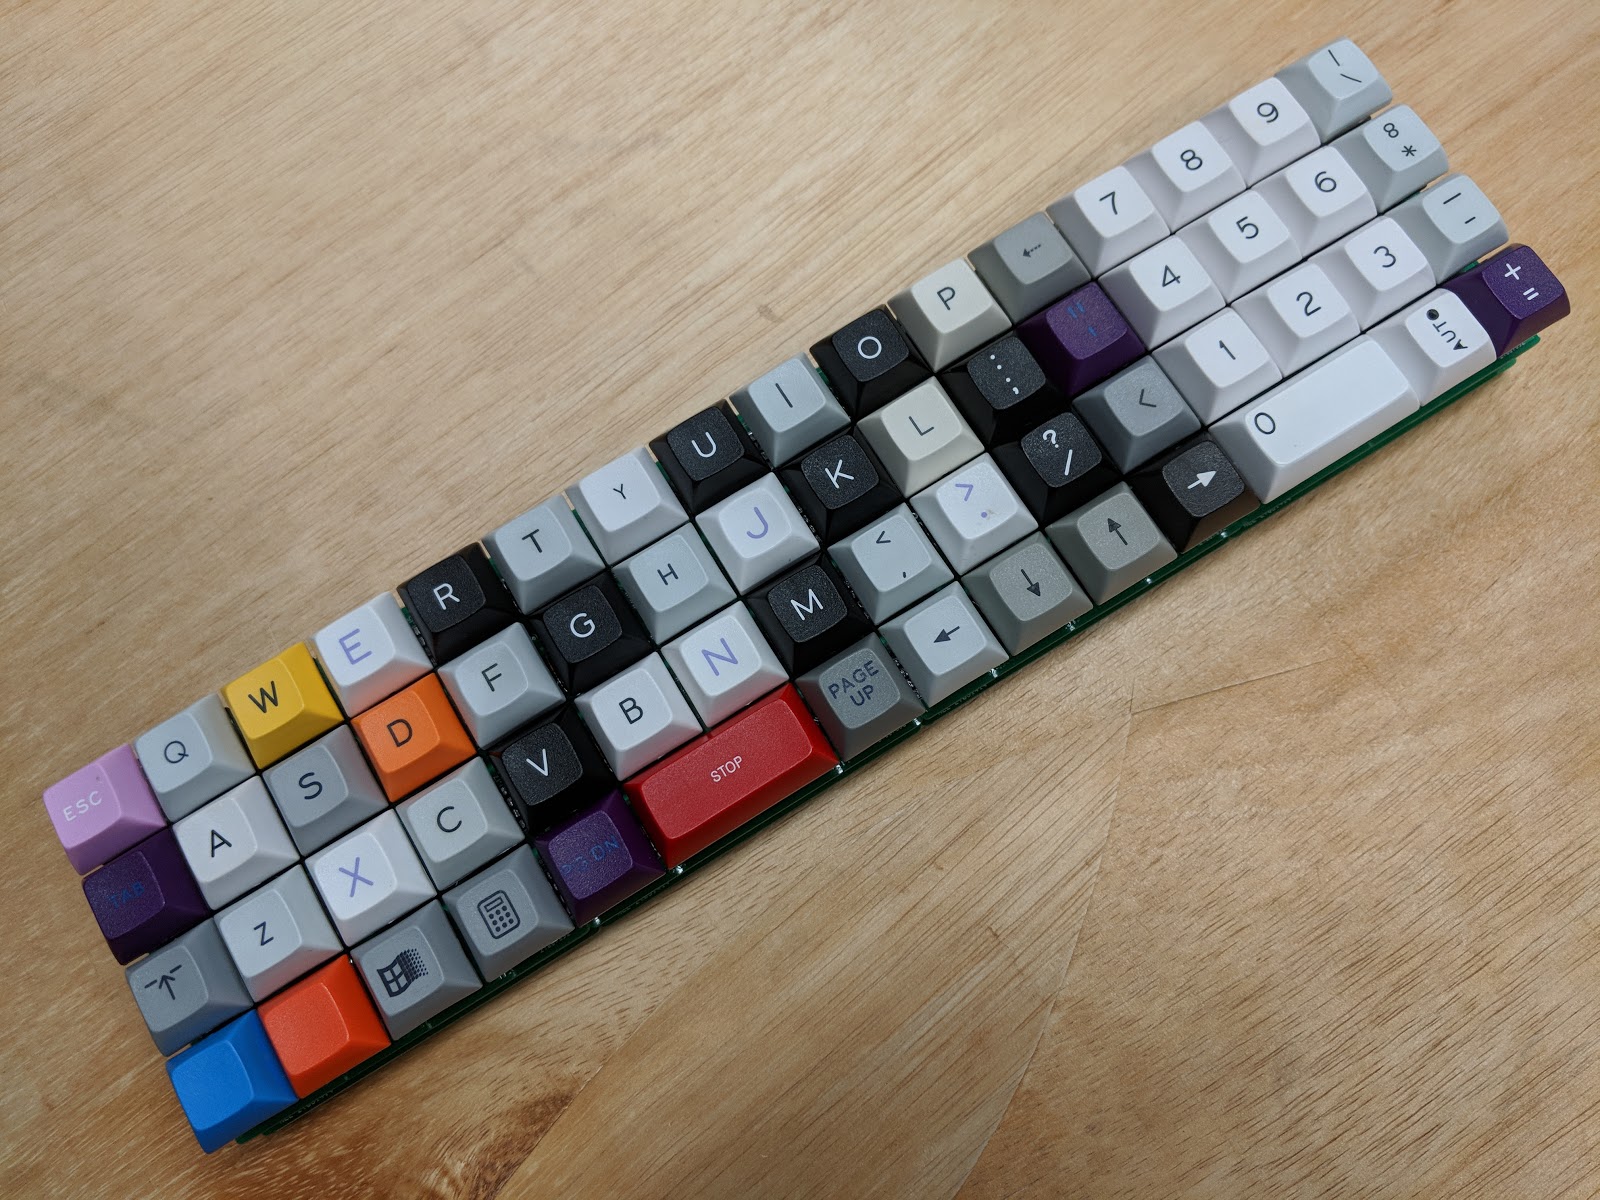 40% Keyboards: 4x4x4x4x4